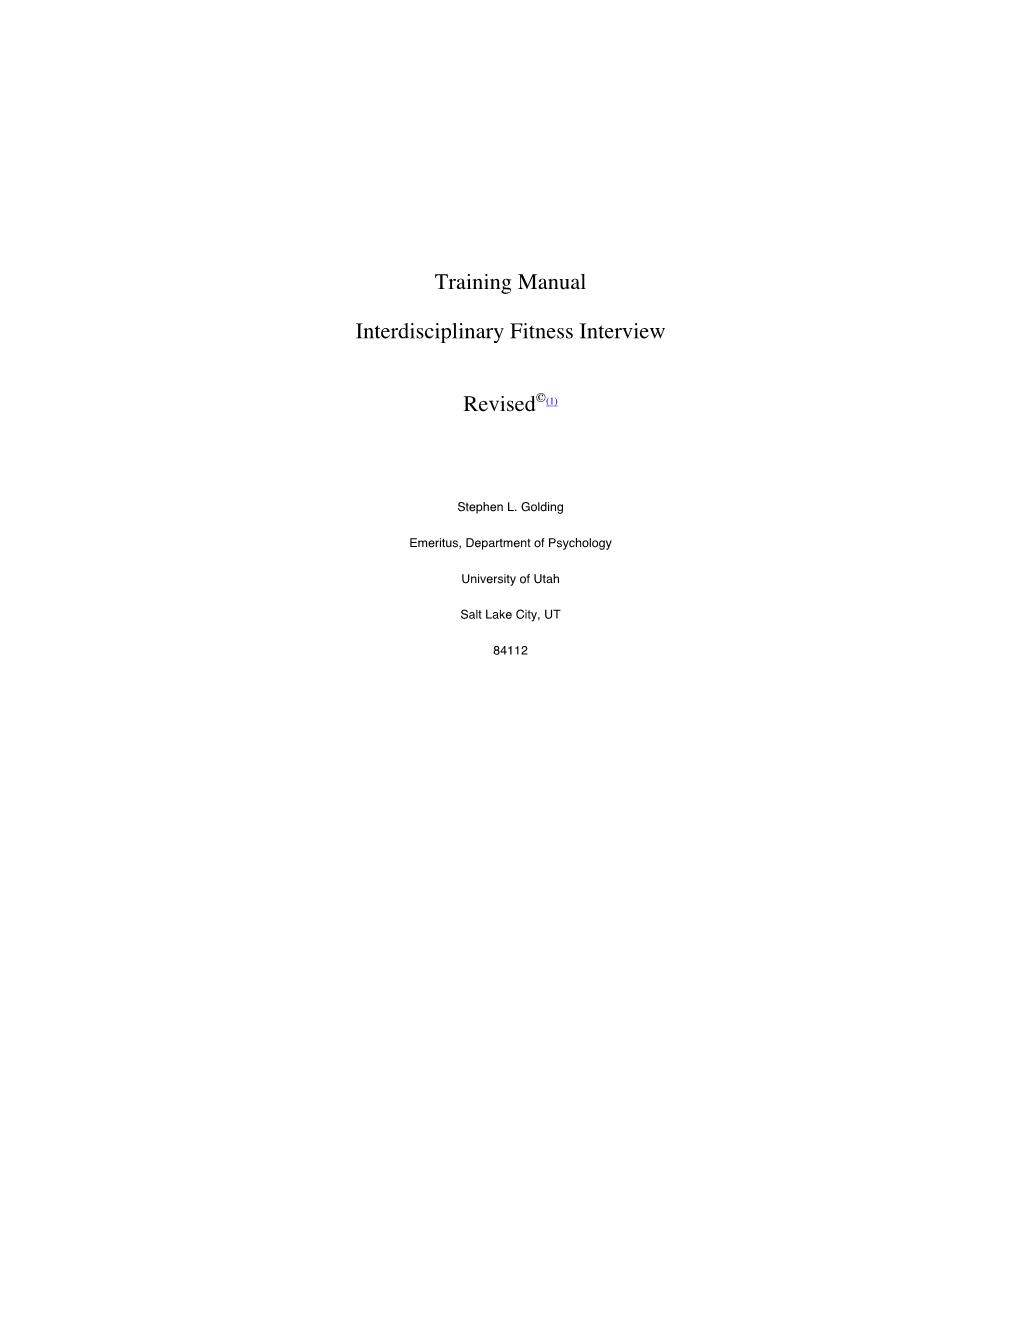 Training Manual Interdisciplinary Fitness Interview Revised©(1)